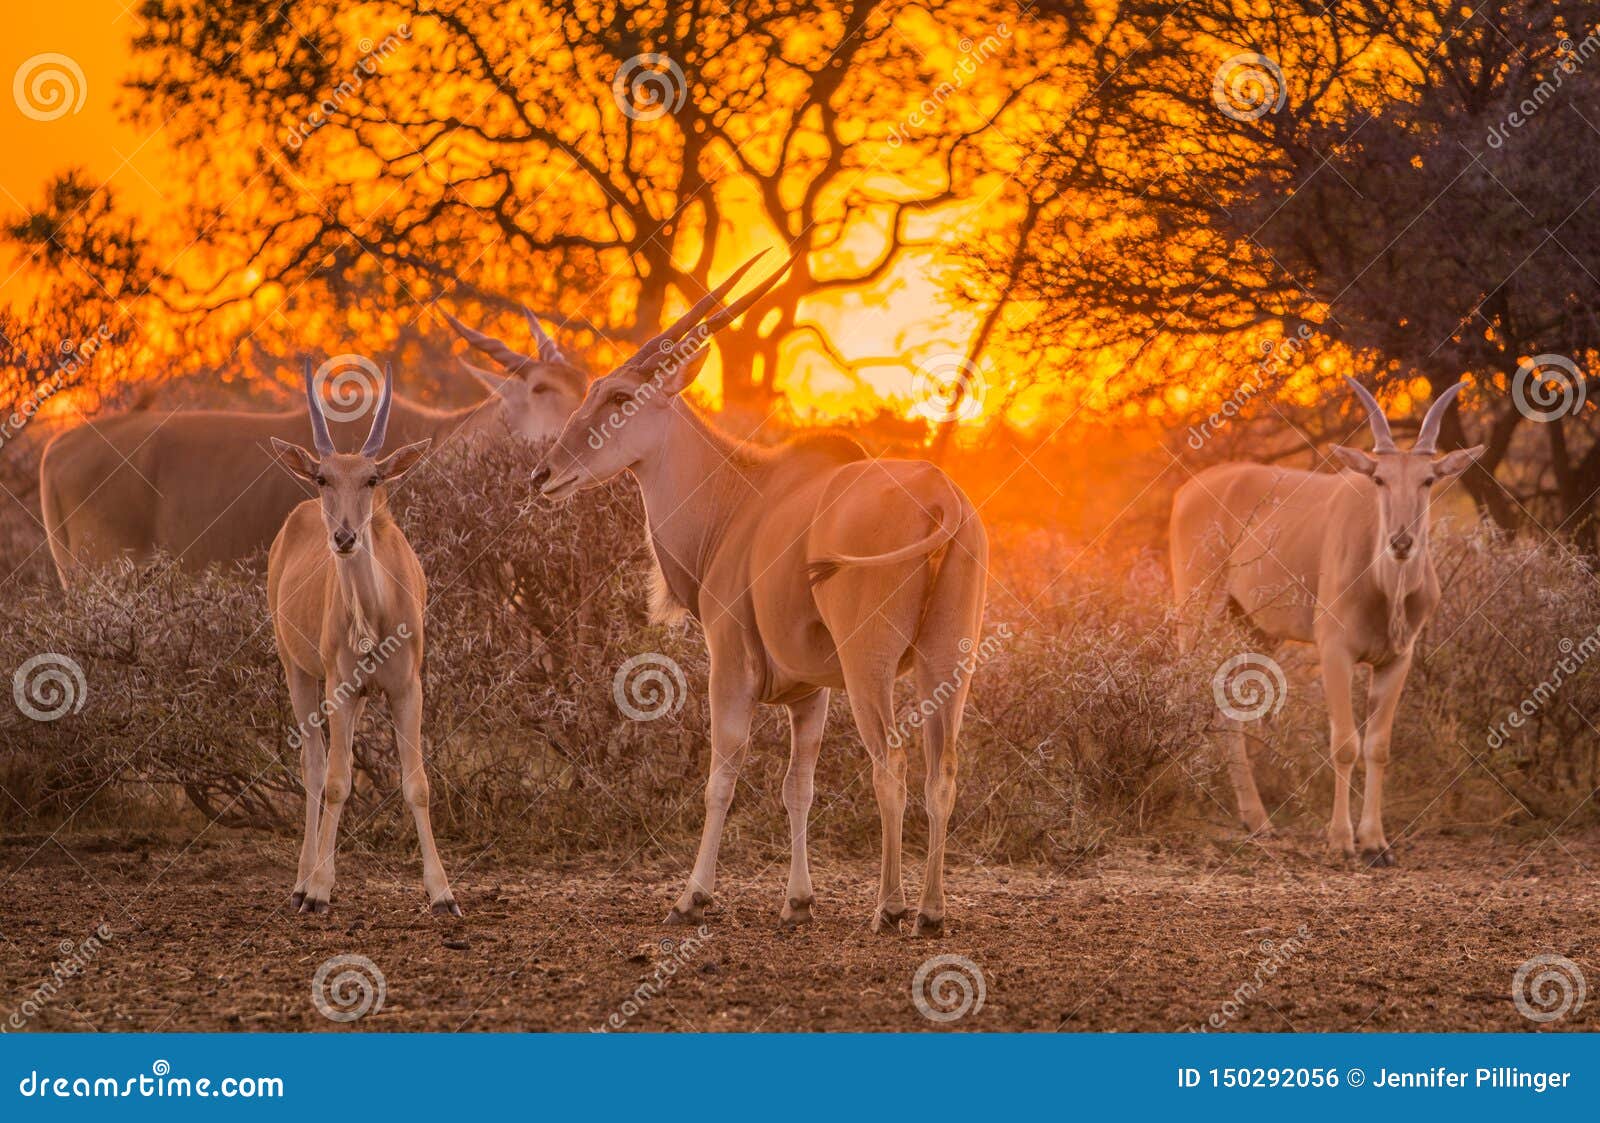 a herd of eland taurotragus oryx gathered around shrubs under an intense orange sunset